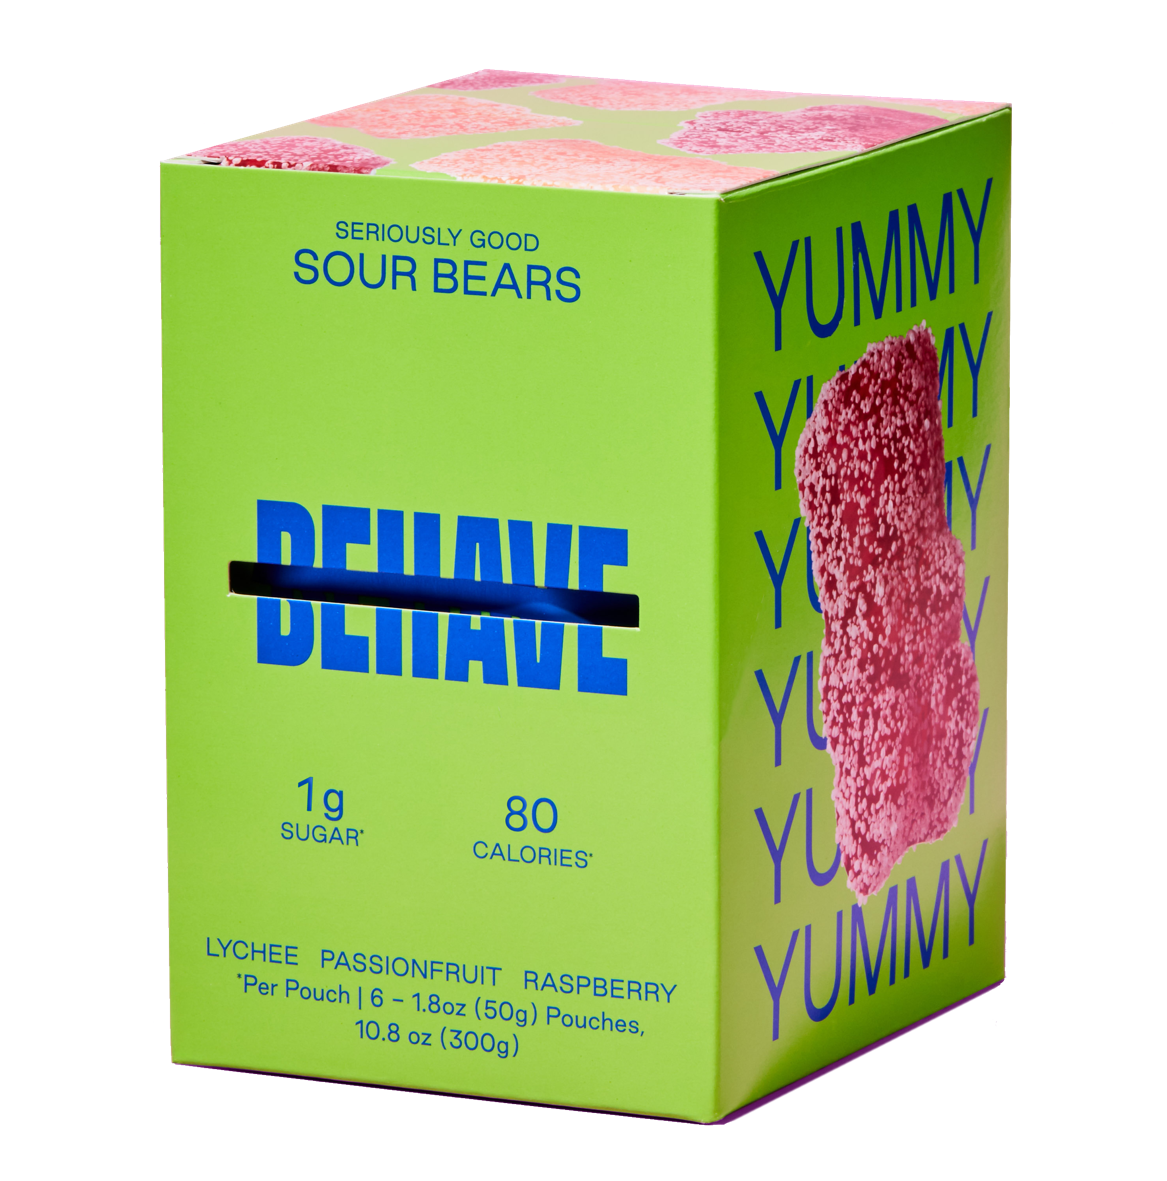 [Behave] Seriously Good Gummy Bears (Sour) | 50g | 1 Bag